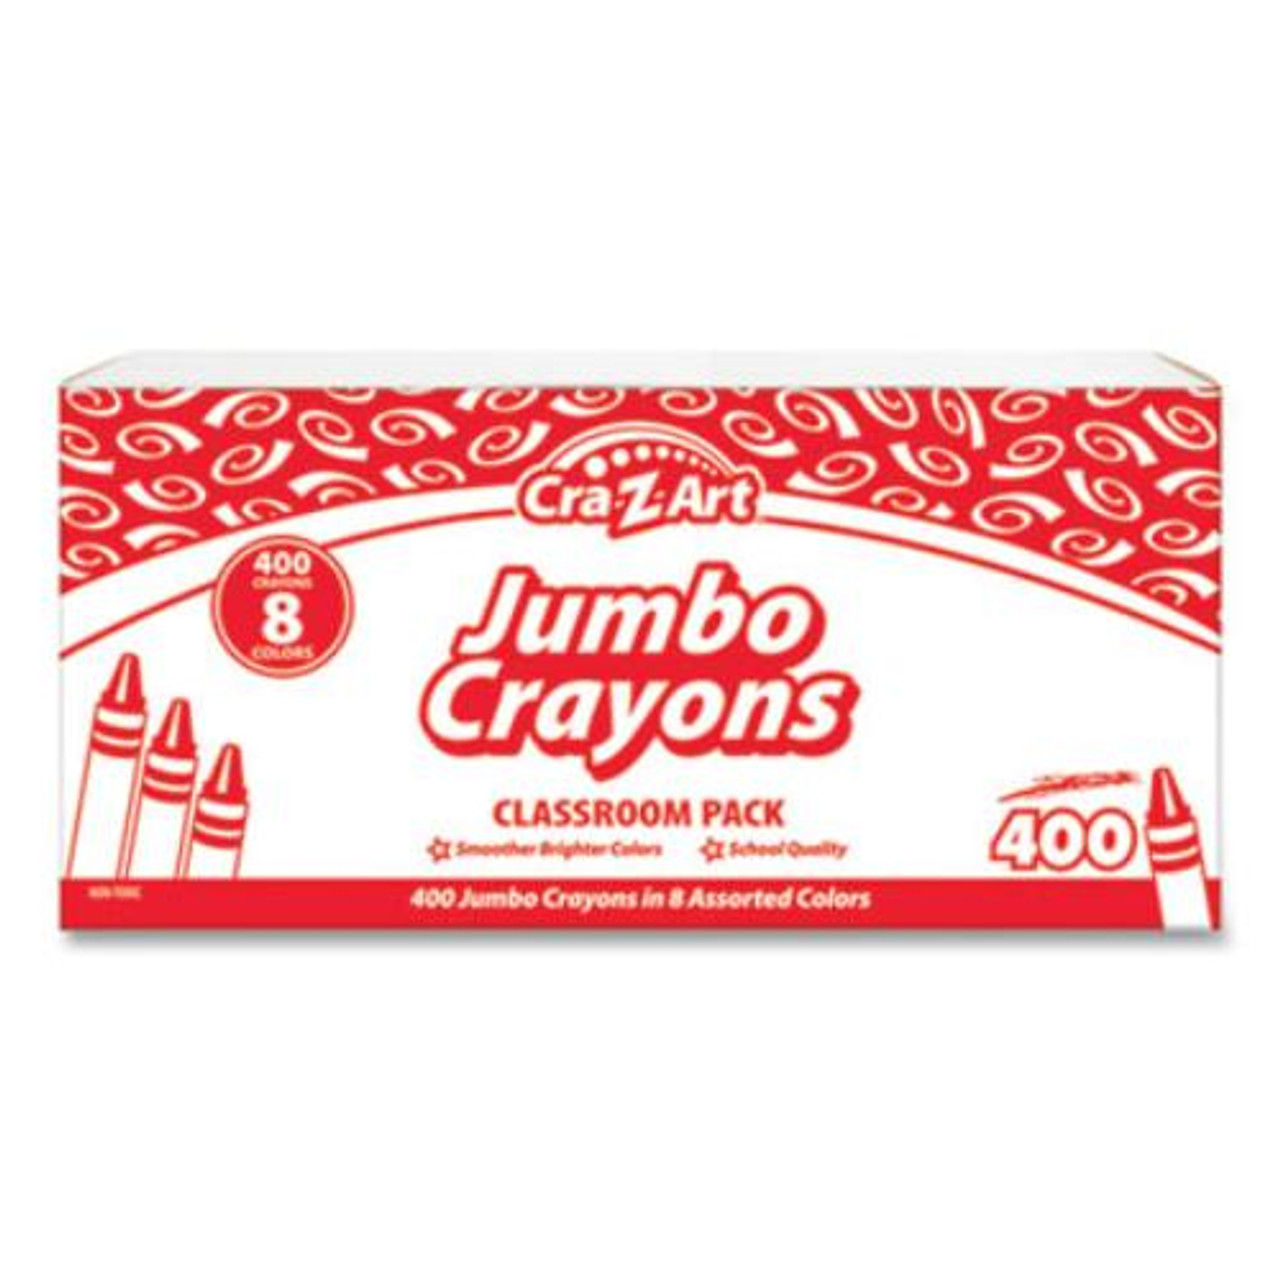 Jumbo Crayon Classroom Pack, 8 Color, Box of 400